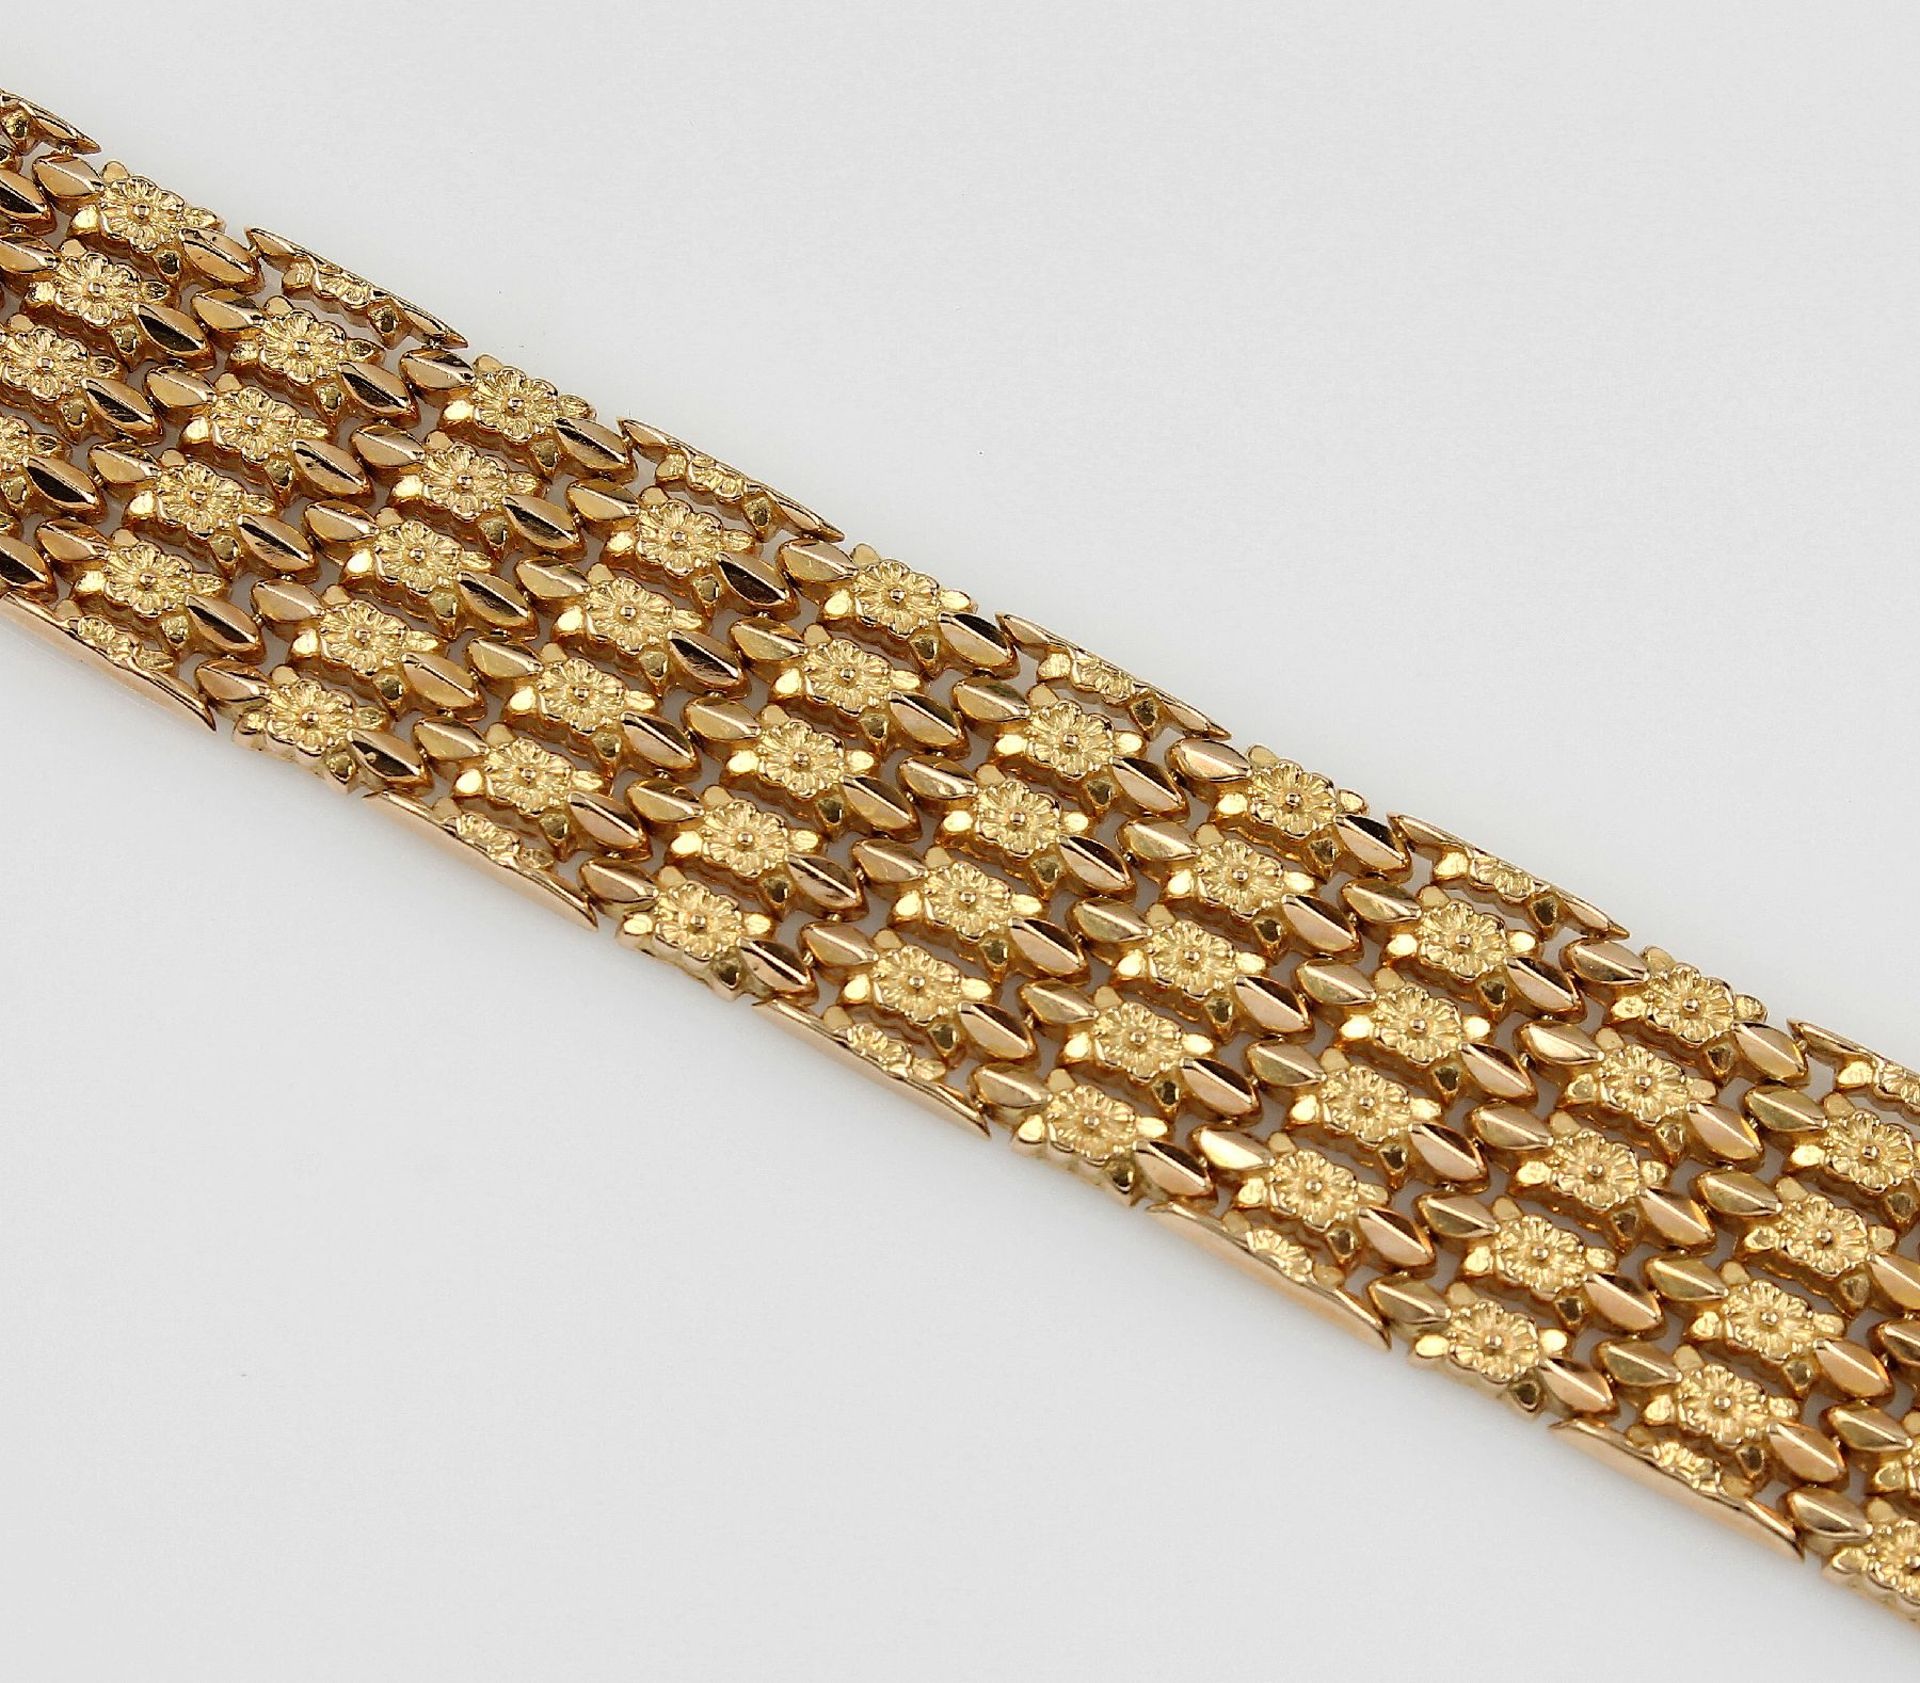 18 kt Gold Armband, GG 750/000, ca. 39.7 g,L. ca. 19.5 cm, Kastenschloss mit Sicherheitsachten18